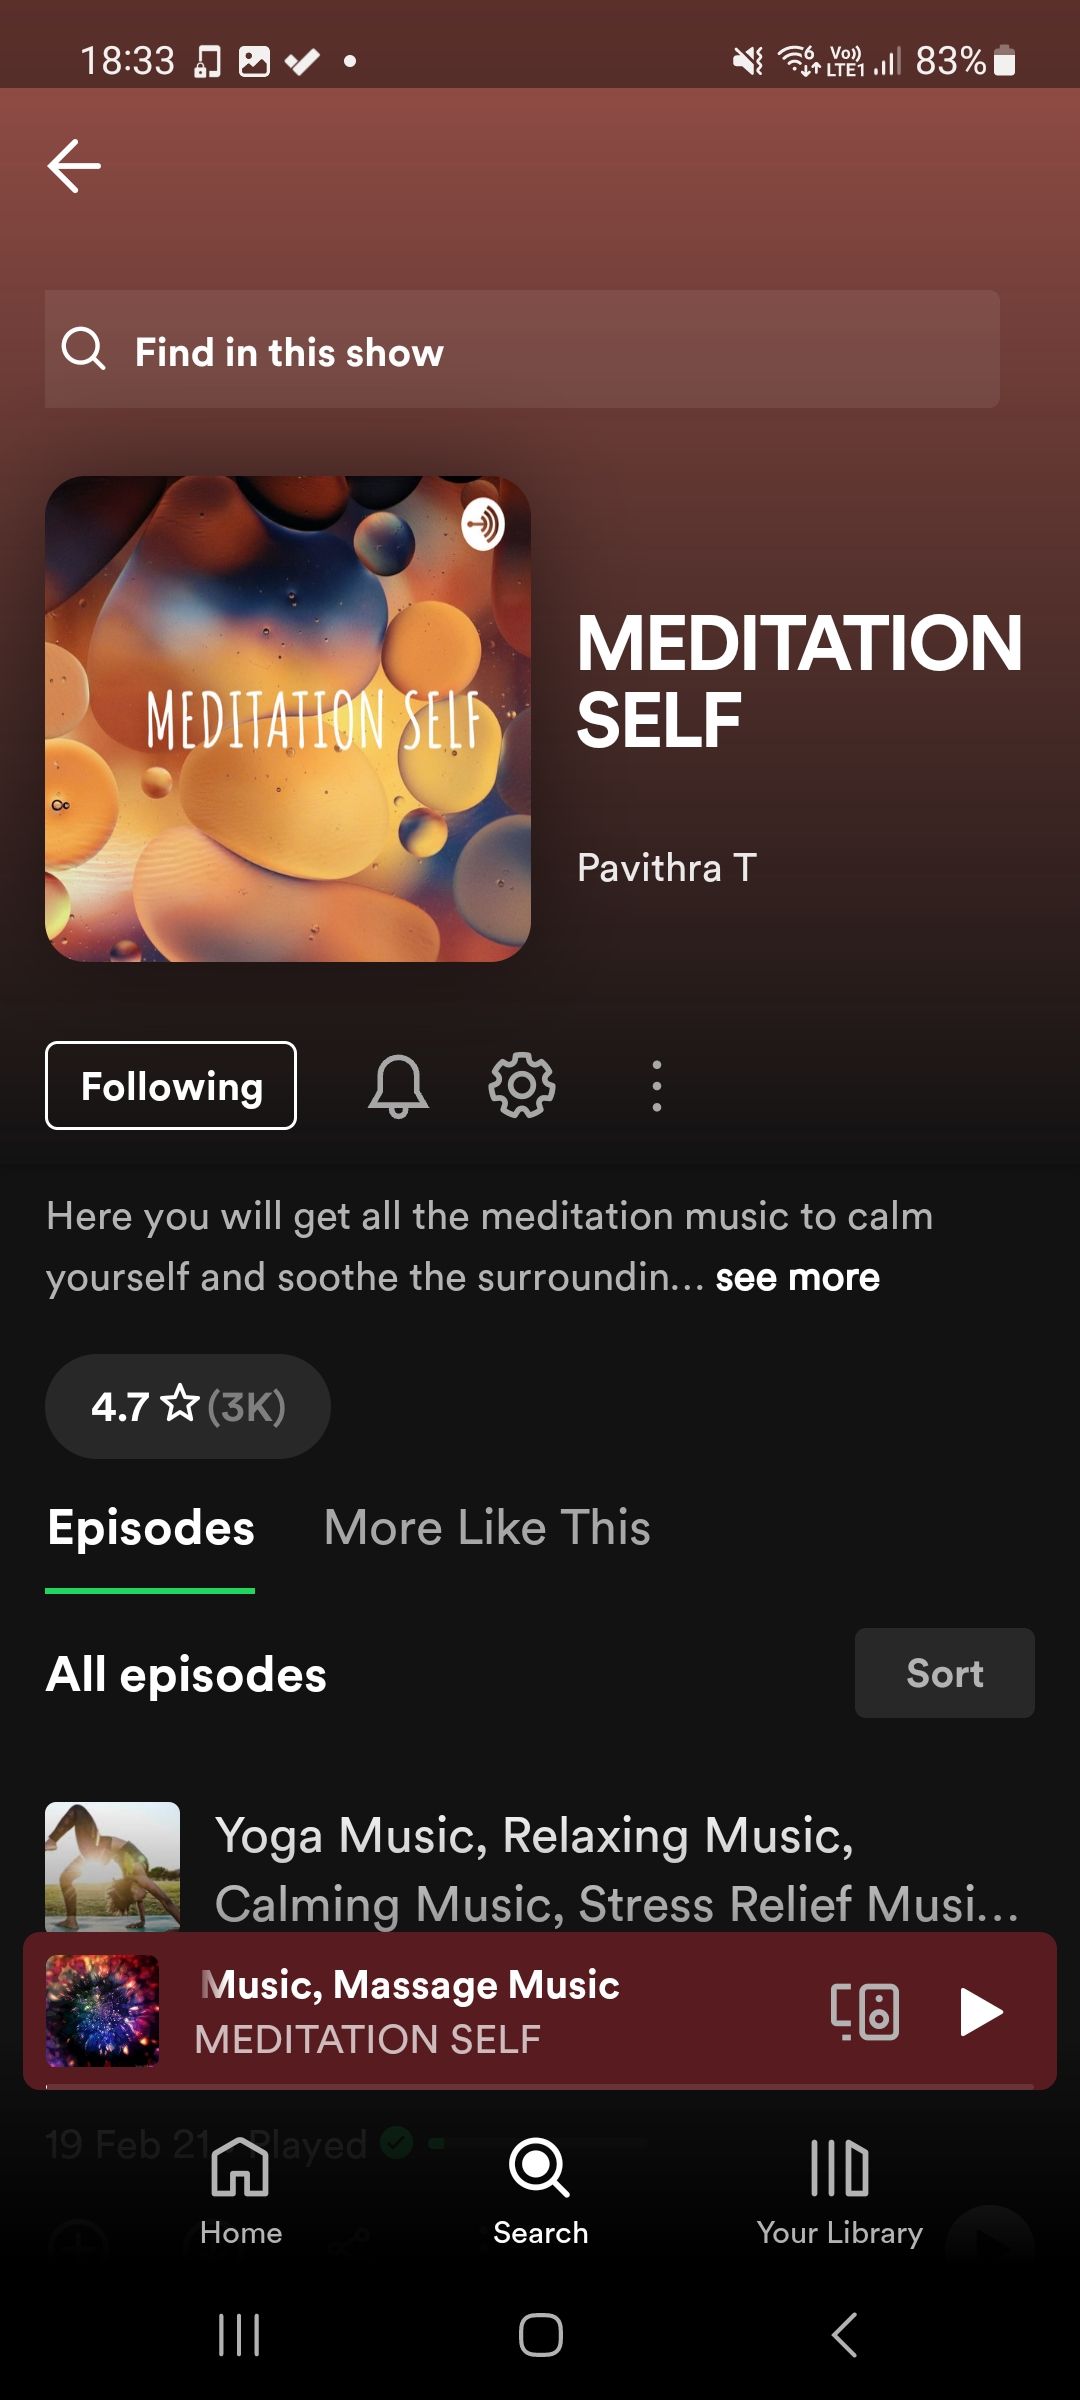 MEDITATION SELF podcast in spotify